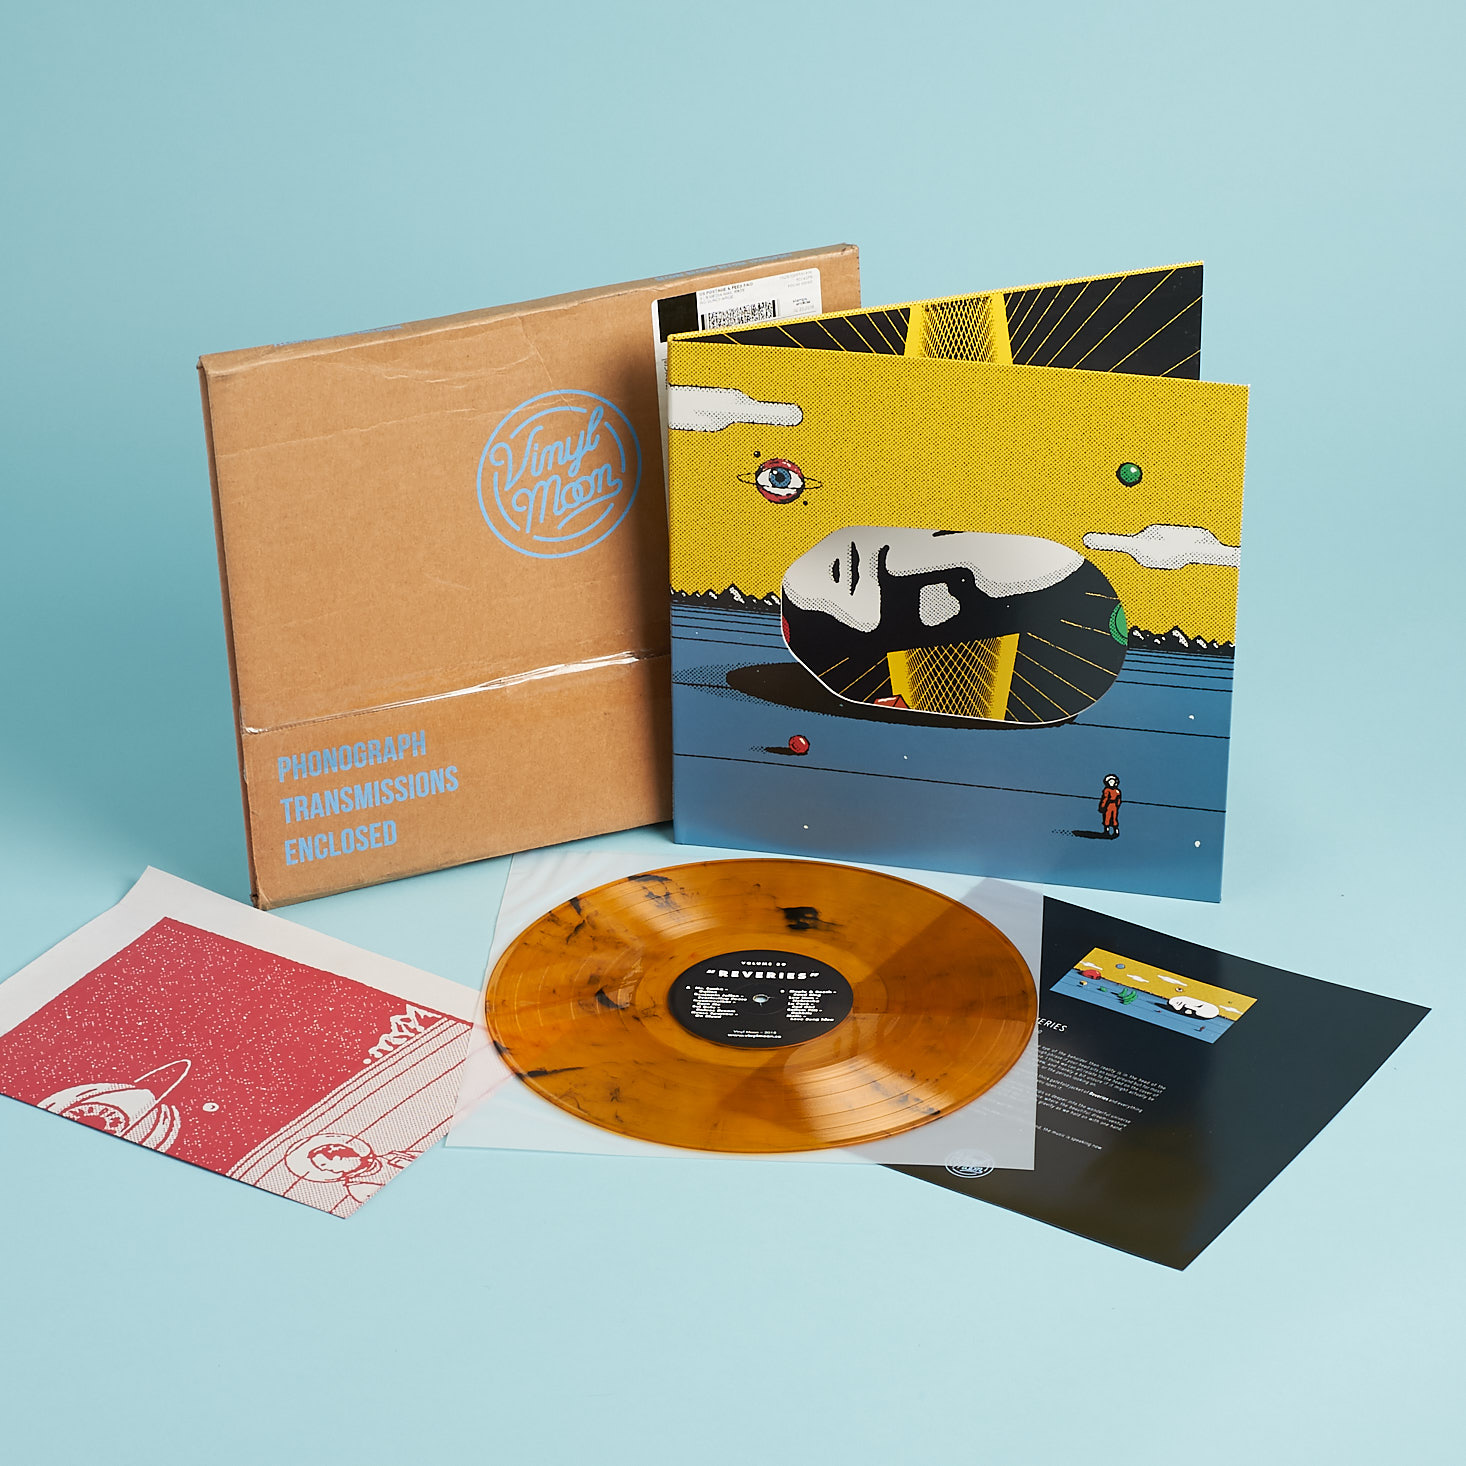 Vinyl Moon Subscription Box Review – Volume 30